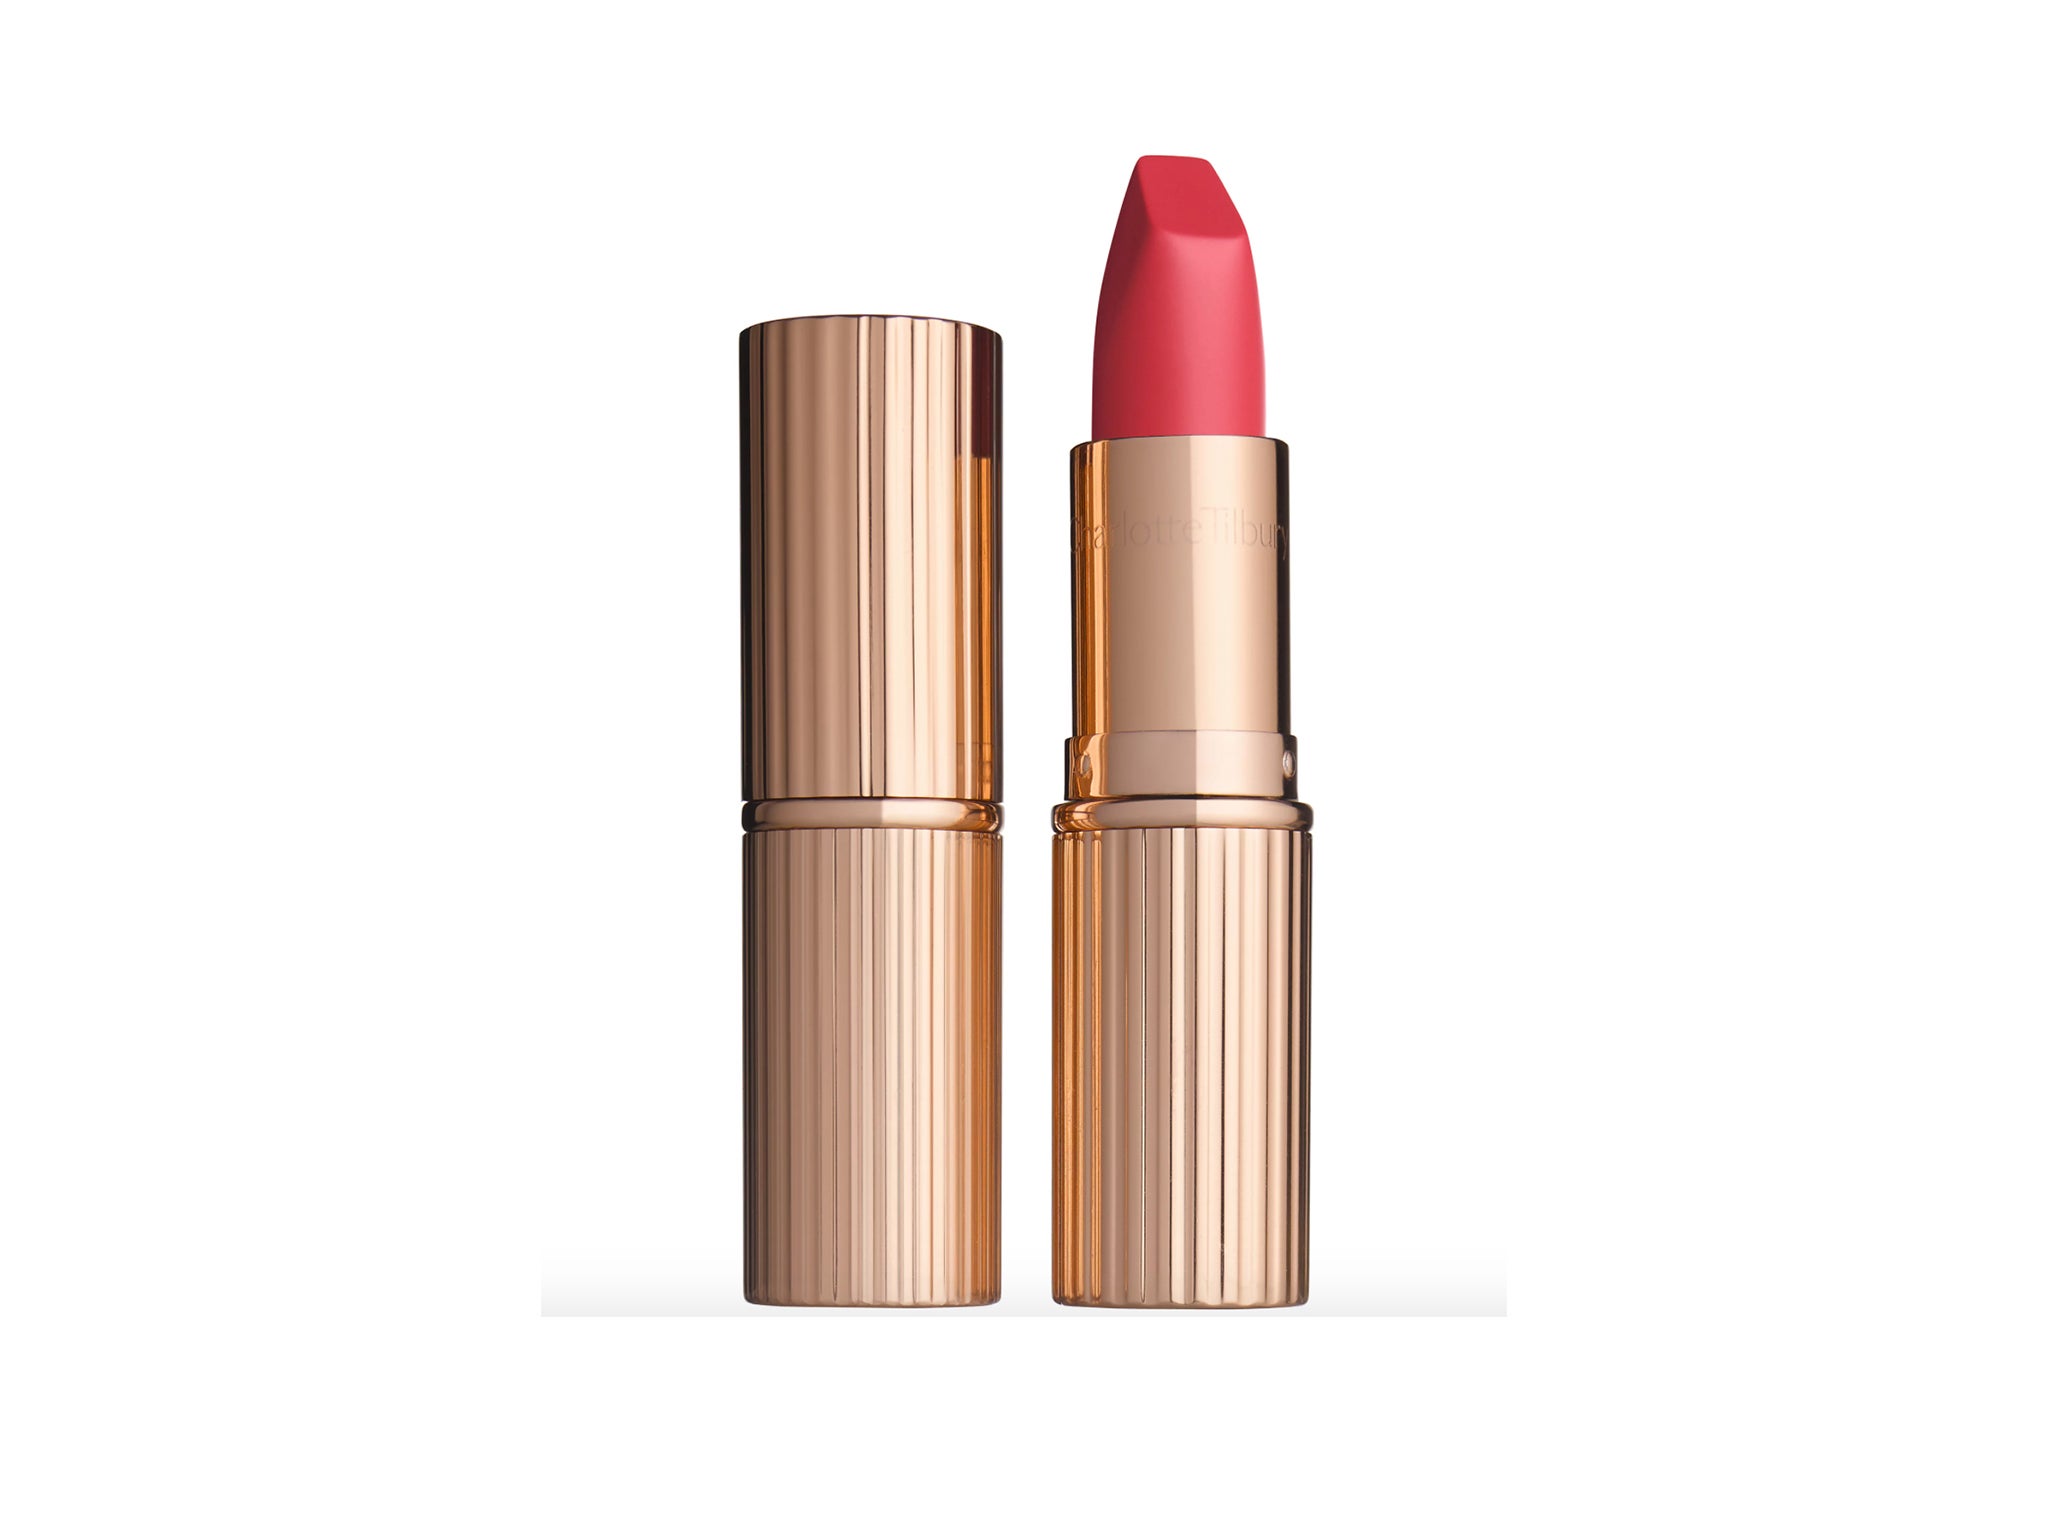 Charlotte Tilbury matte revolution lipstick in ‘lost cherry’: £25, Johnlewis.com